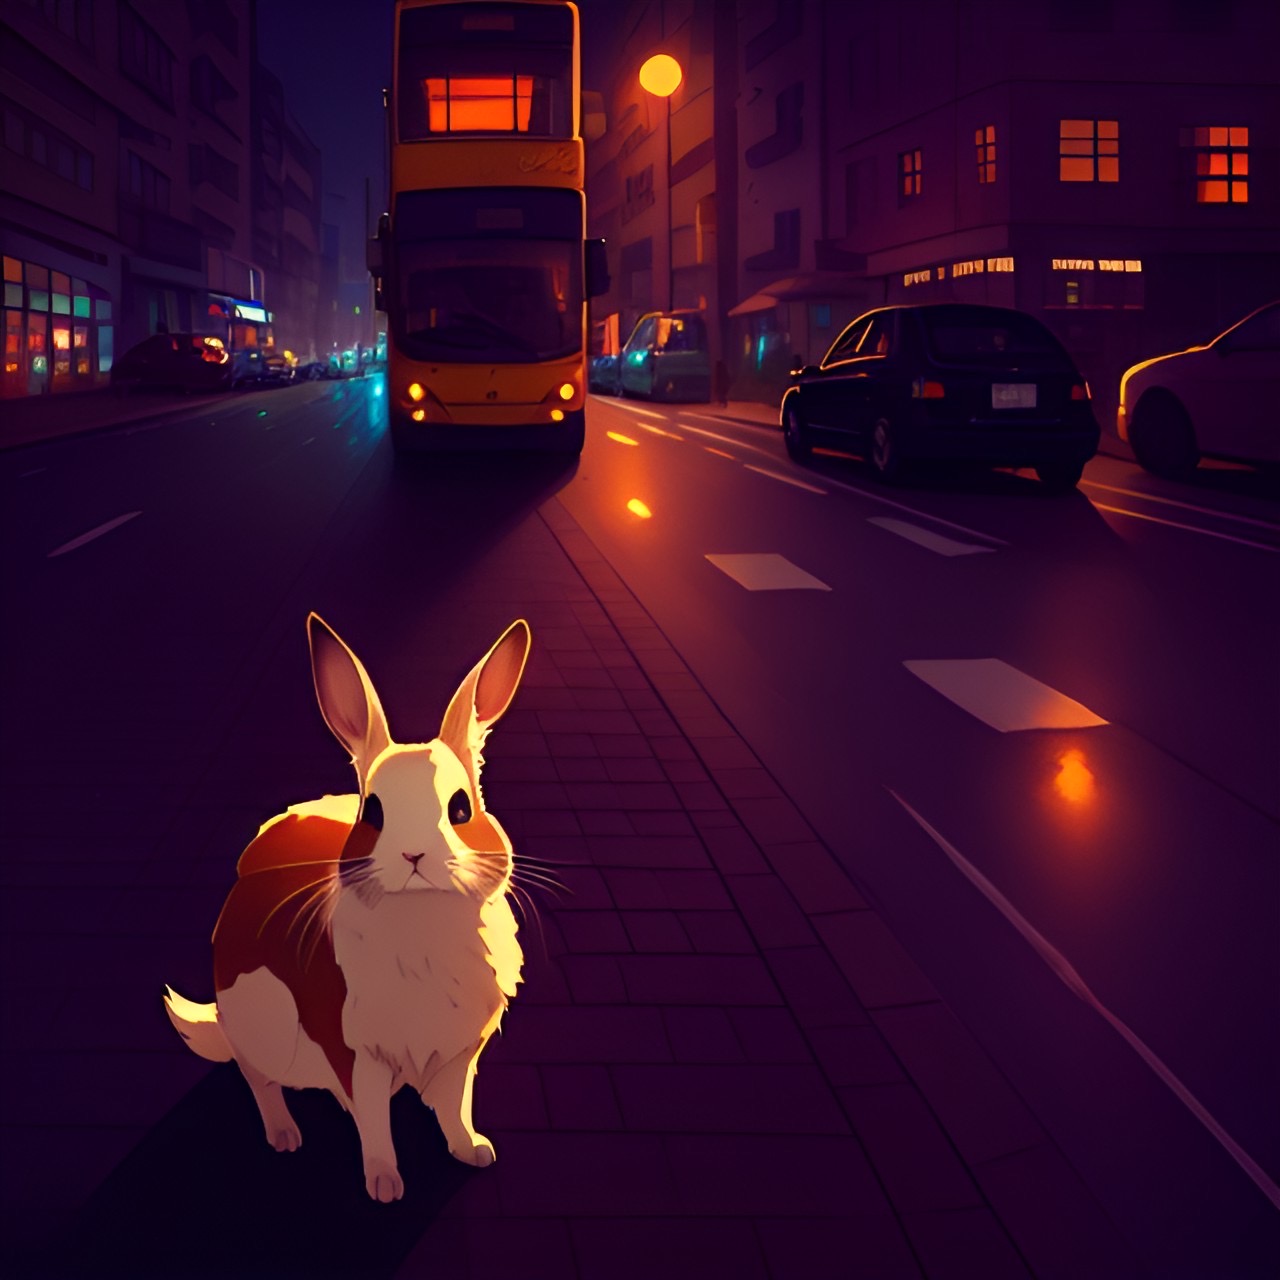 A rabbit on a city street at night